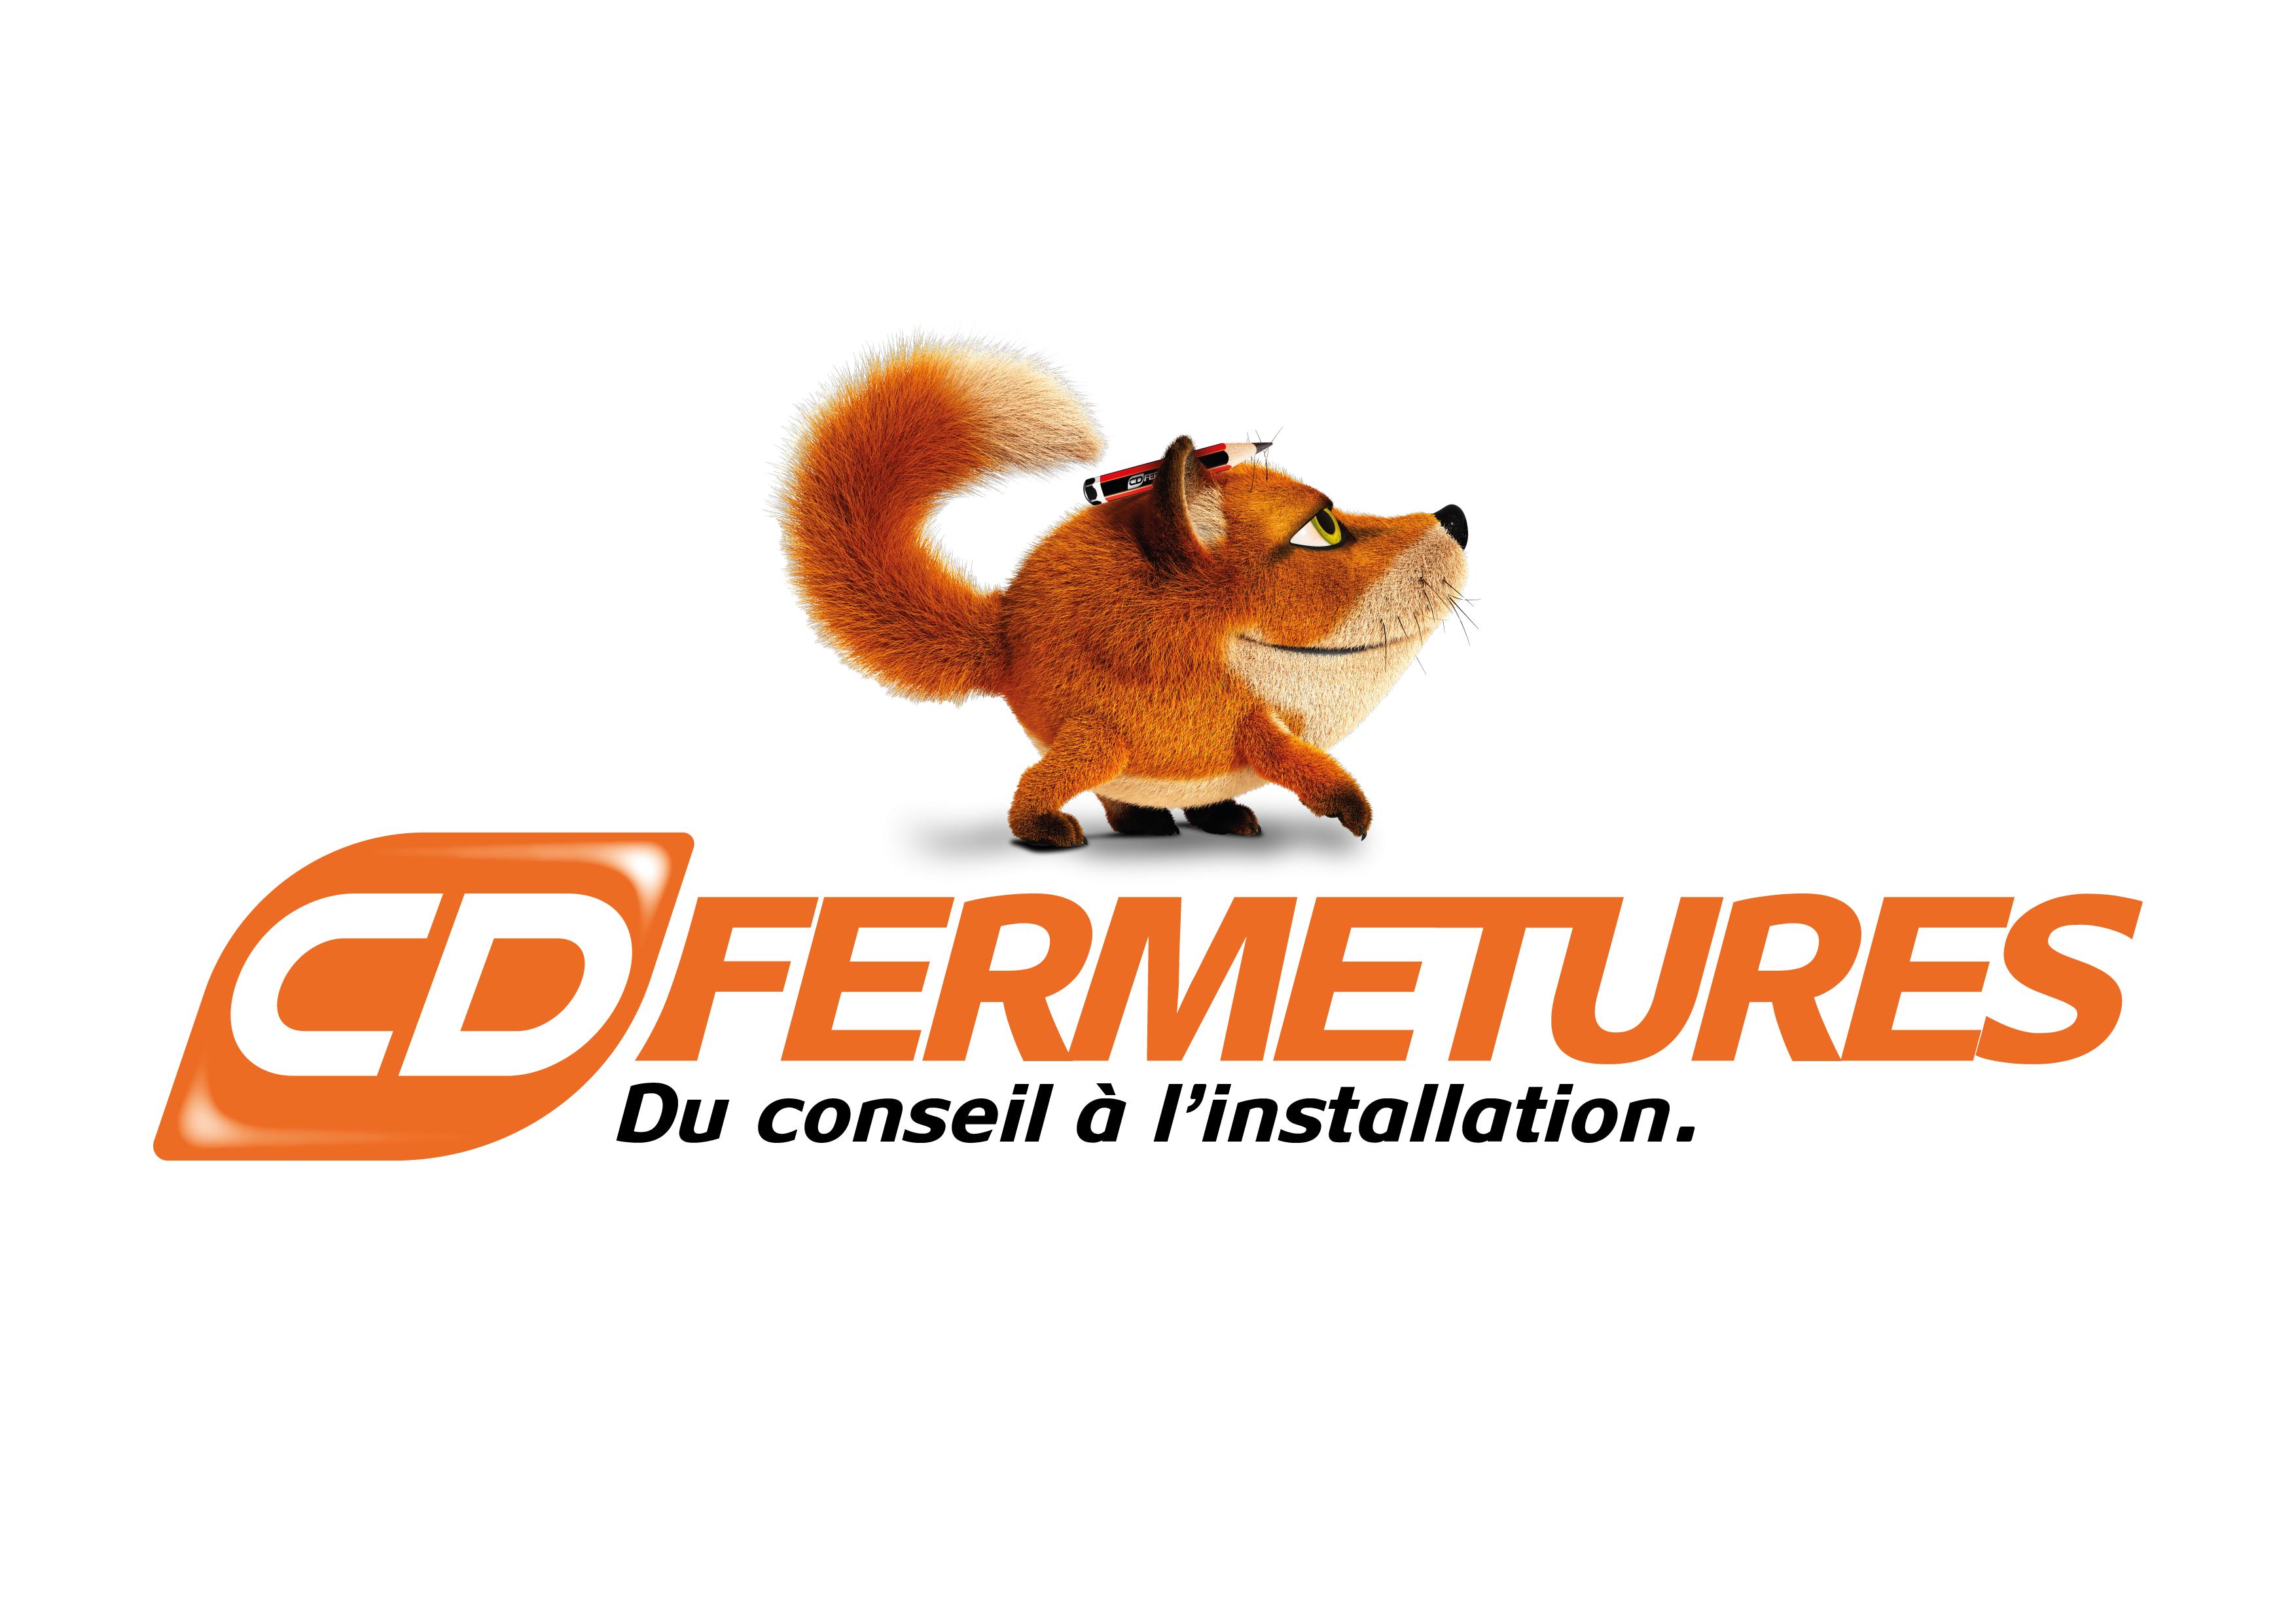 CD Fermetures - Expert rénovateur K•LINE